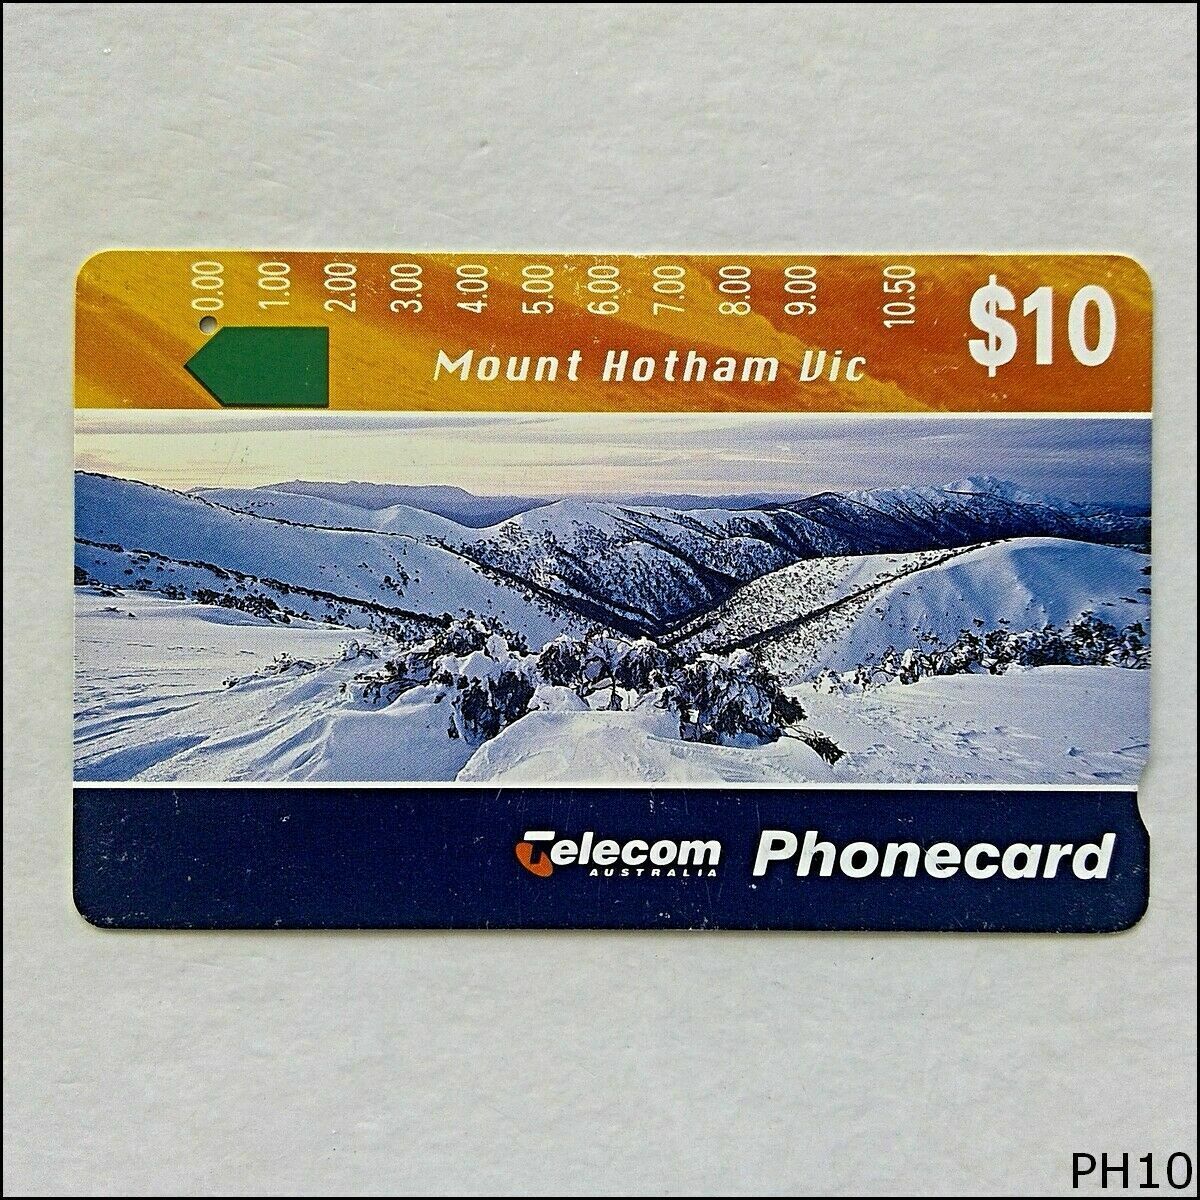 Telecom Mount Hotham Vic N940863a 458 $10 Phonecard (ph10)